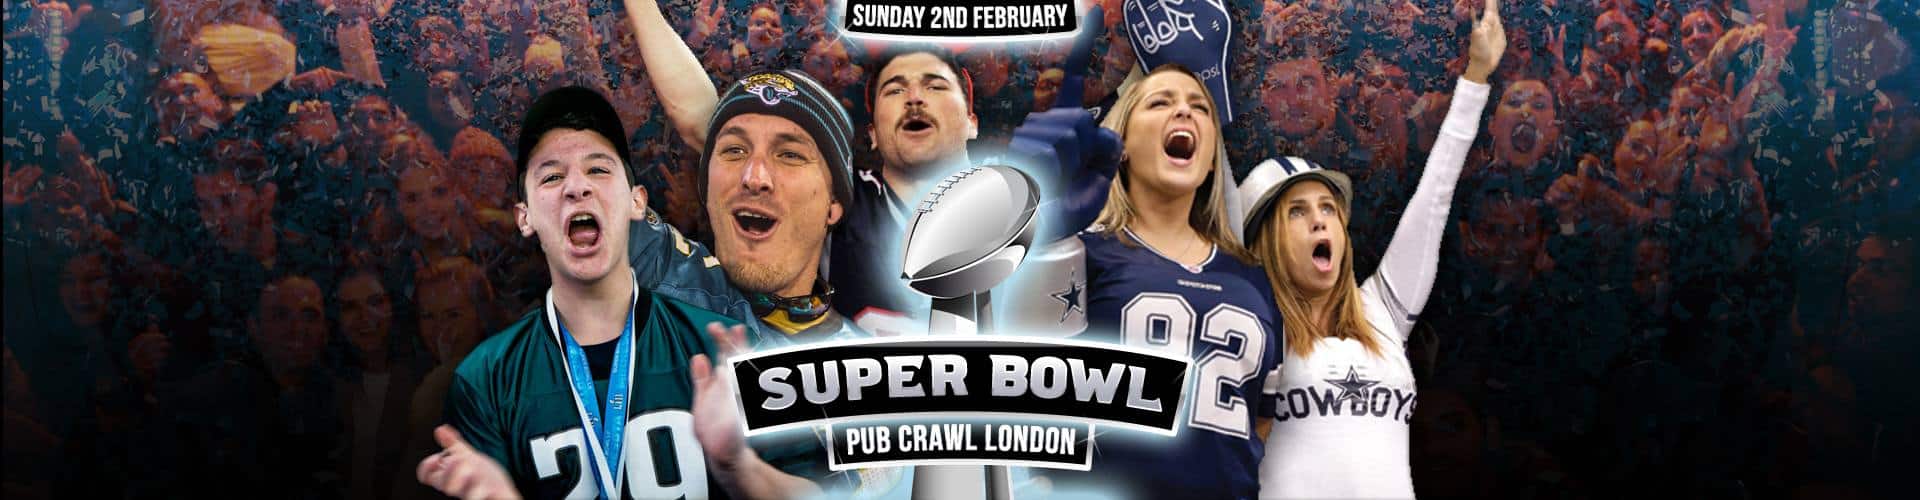 Super Bowl Pub Crawl London